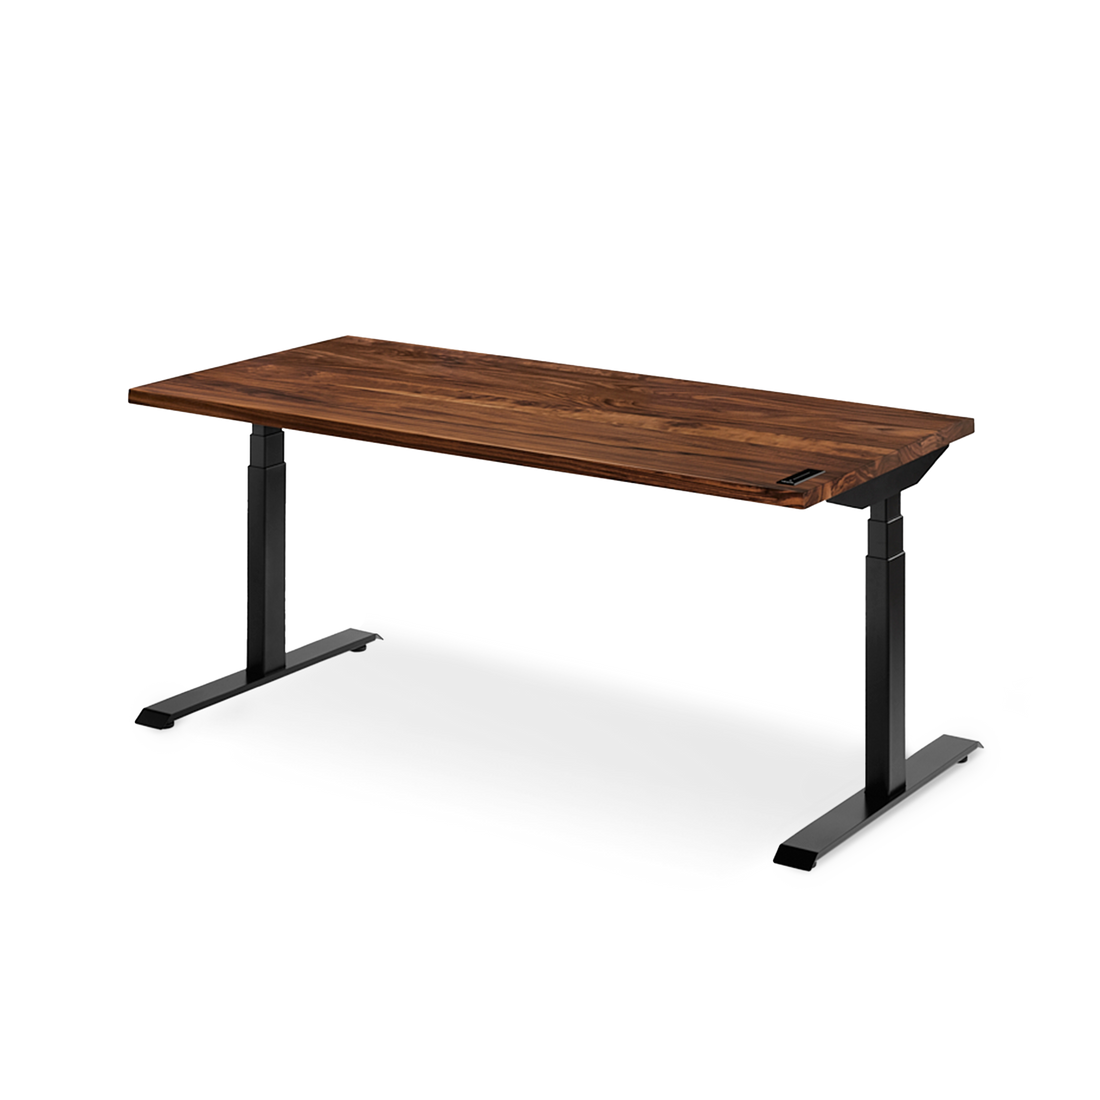 The Sway Standing Desk in Walnut - ergonofis